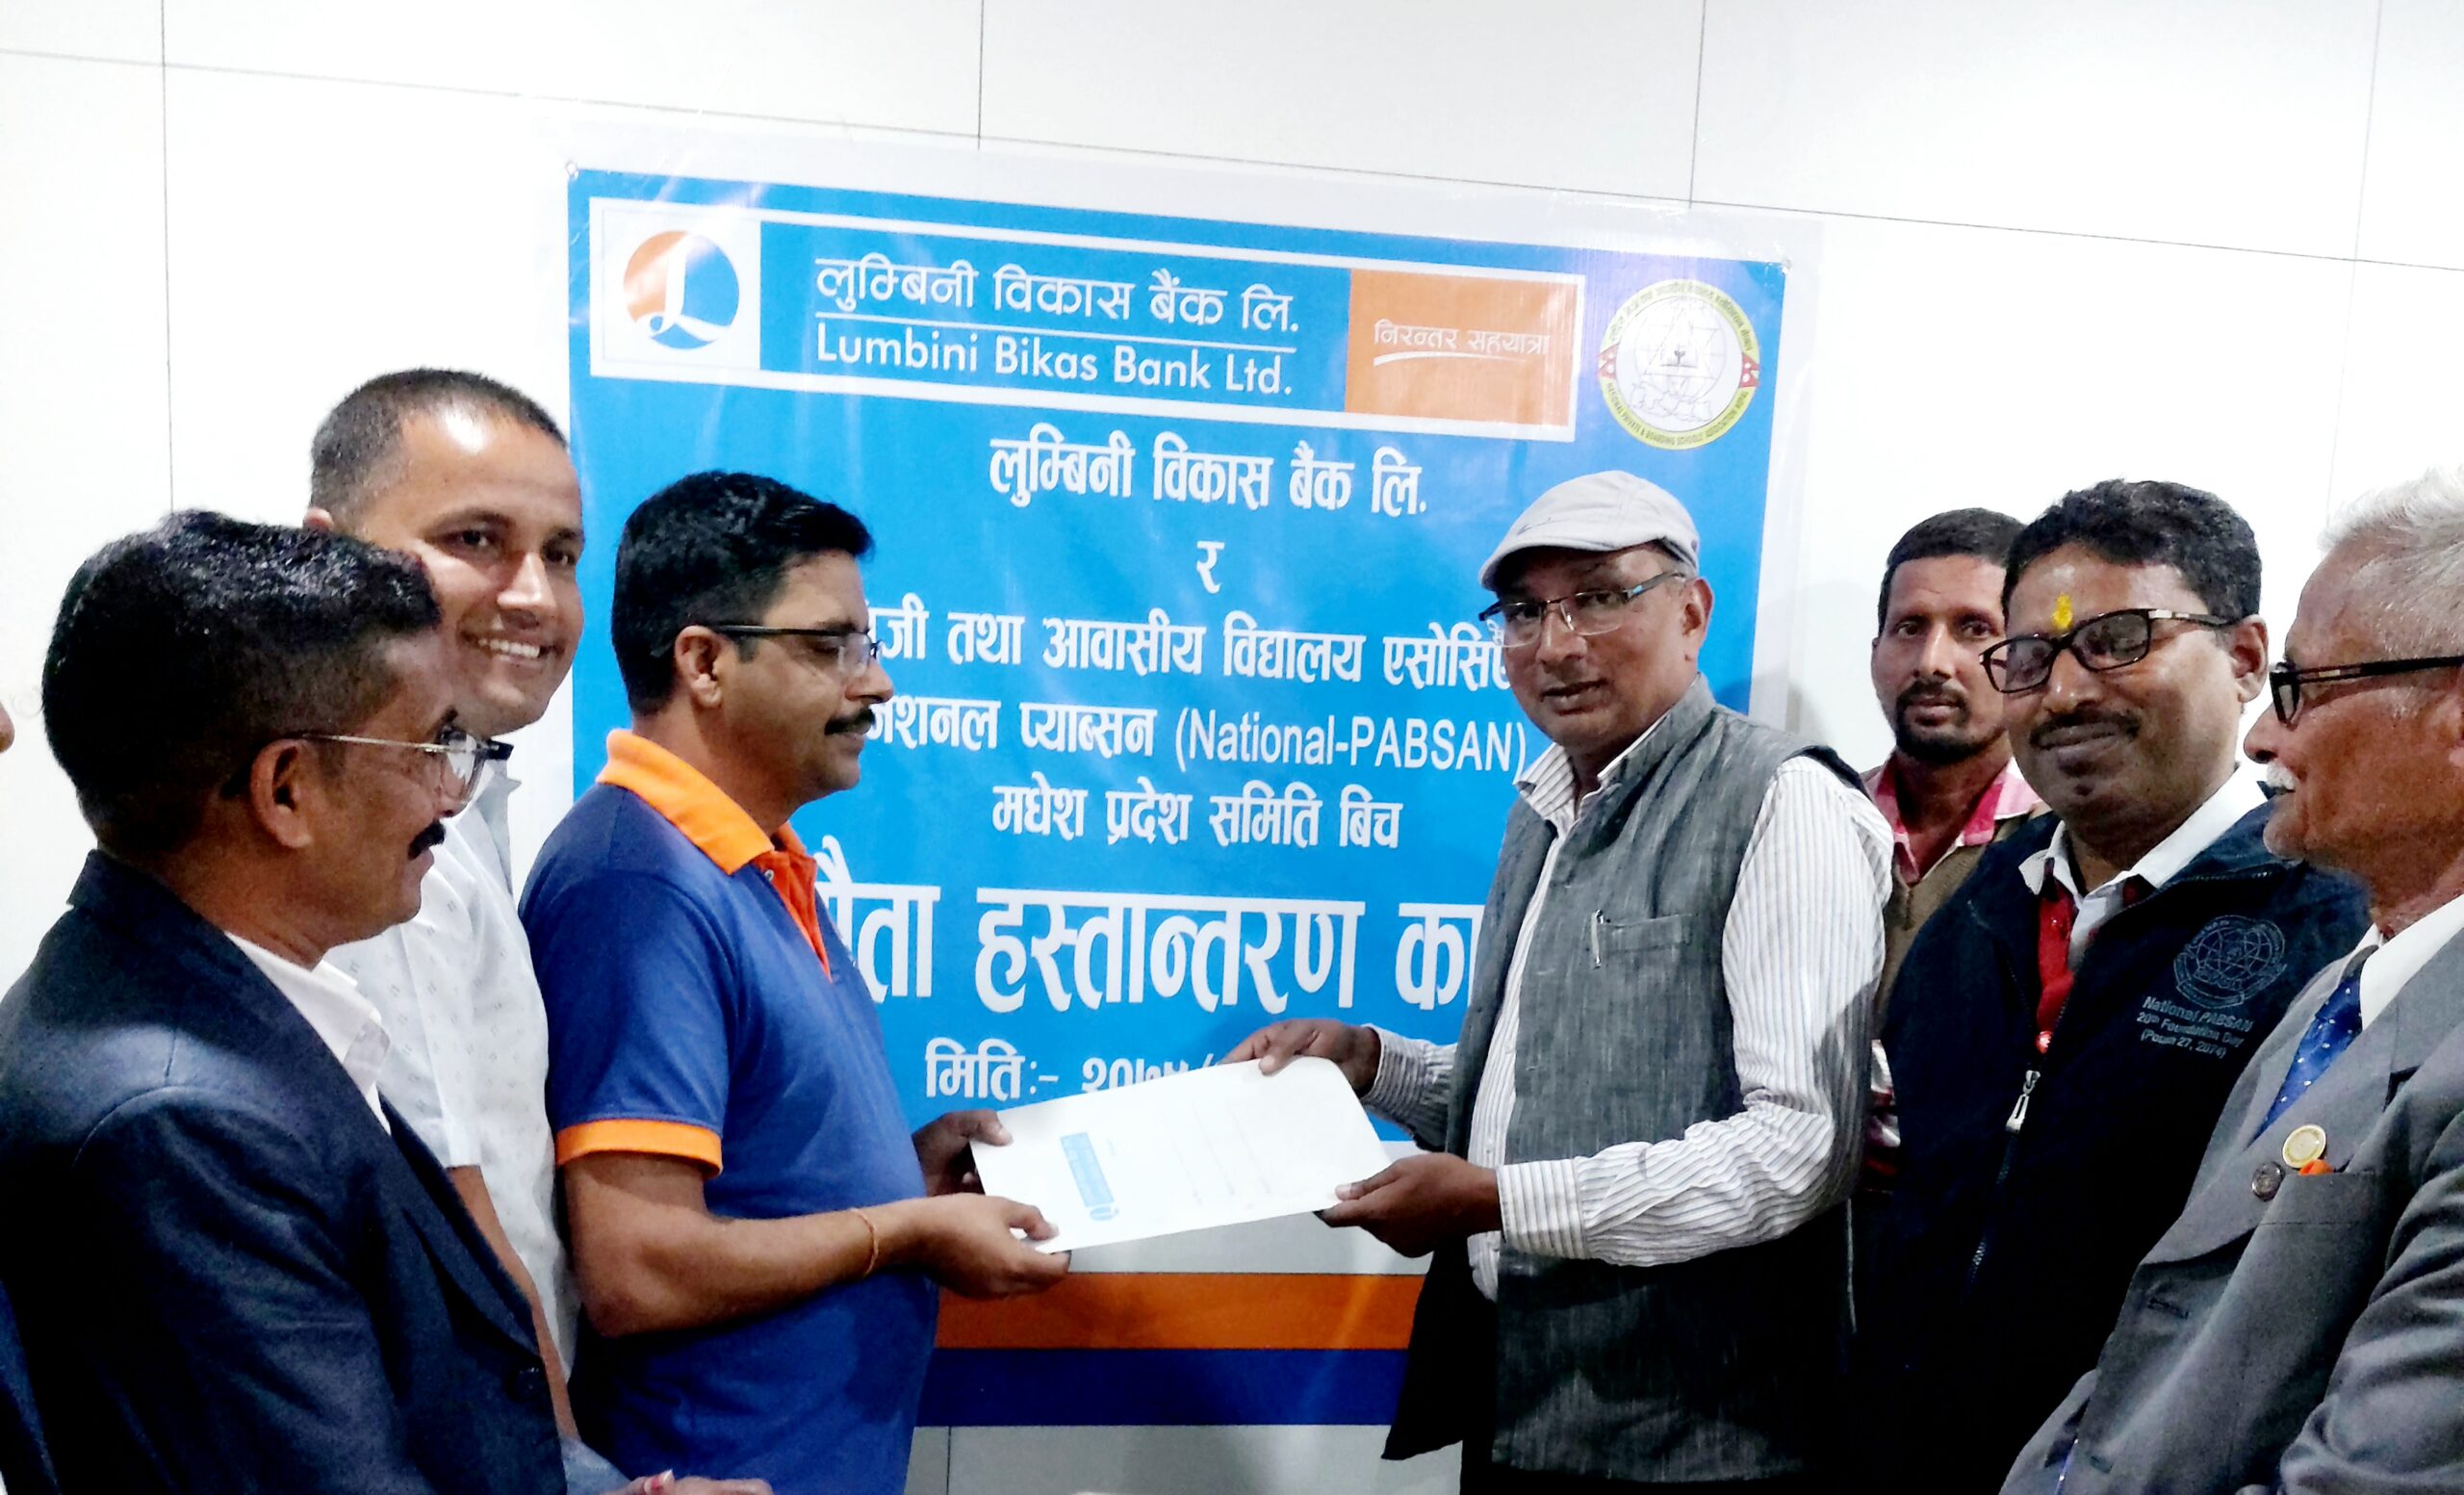 लुम्बिनी बिकास बैंक र नेशनल प्याब्सन मधेश प्रदेश समितीबीच सम्झौता